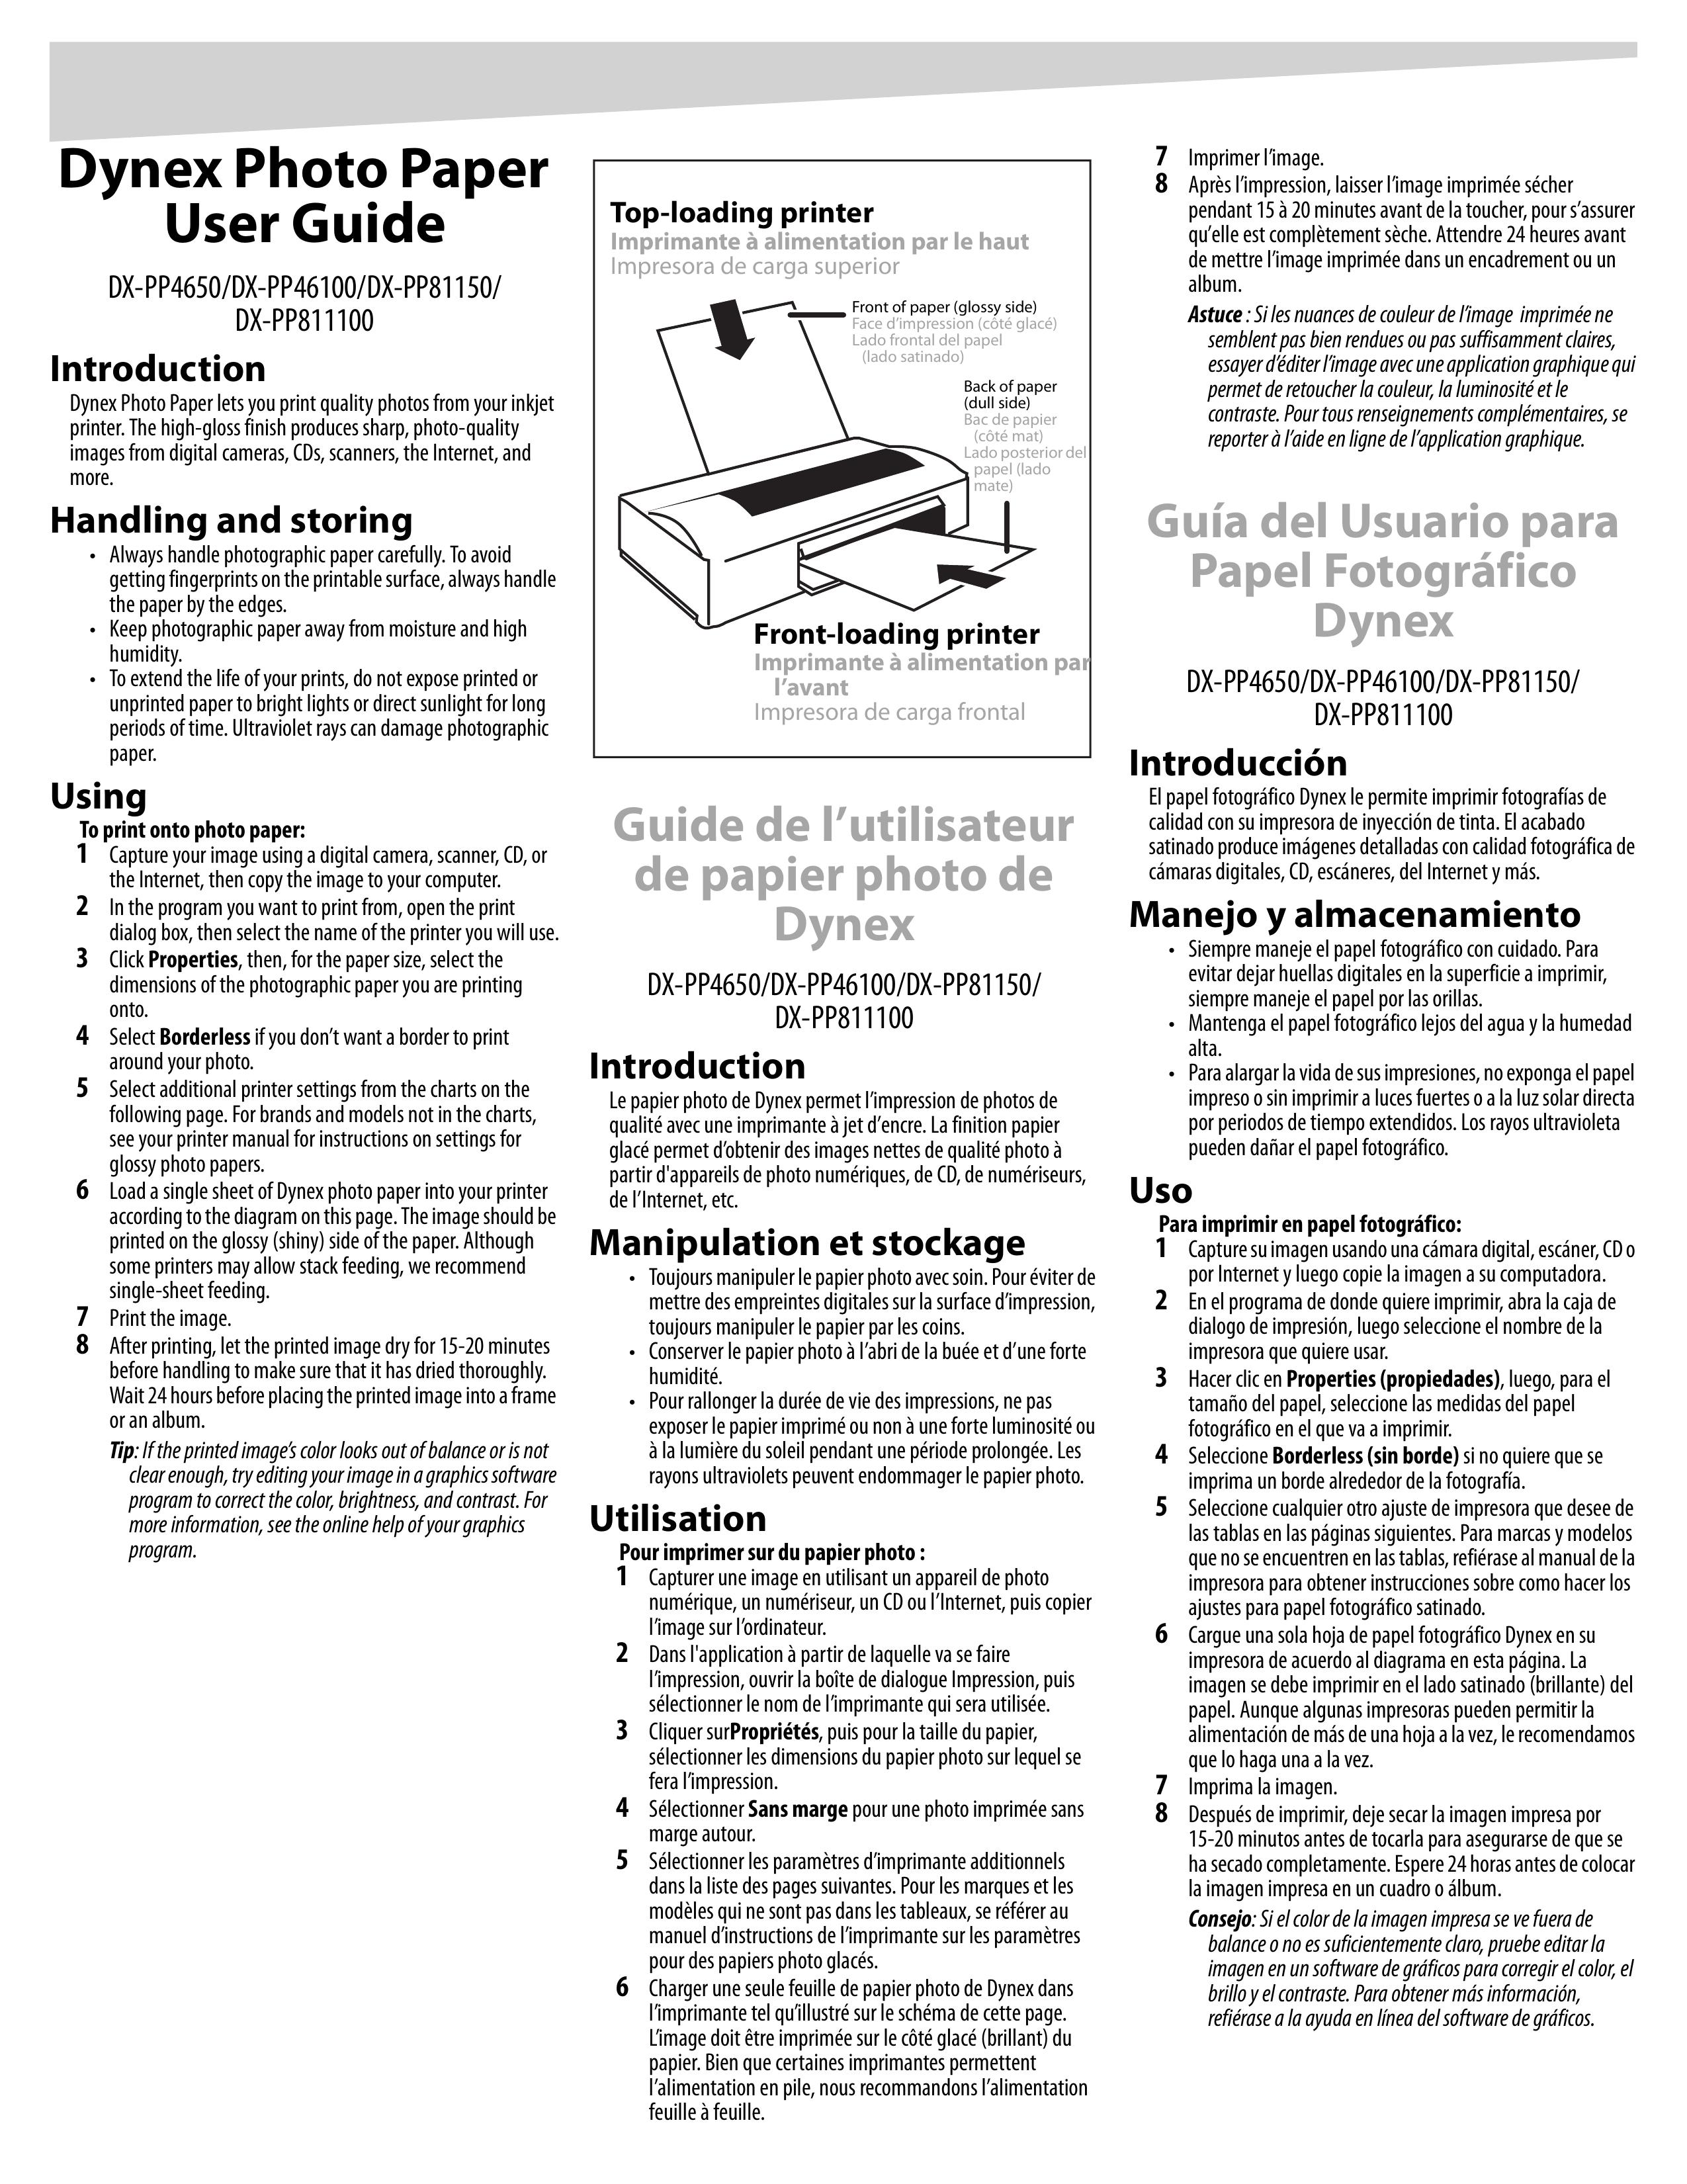 Dynex DX-PP46100 Photo Printer User Manual (Page 1)